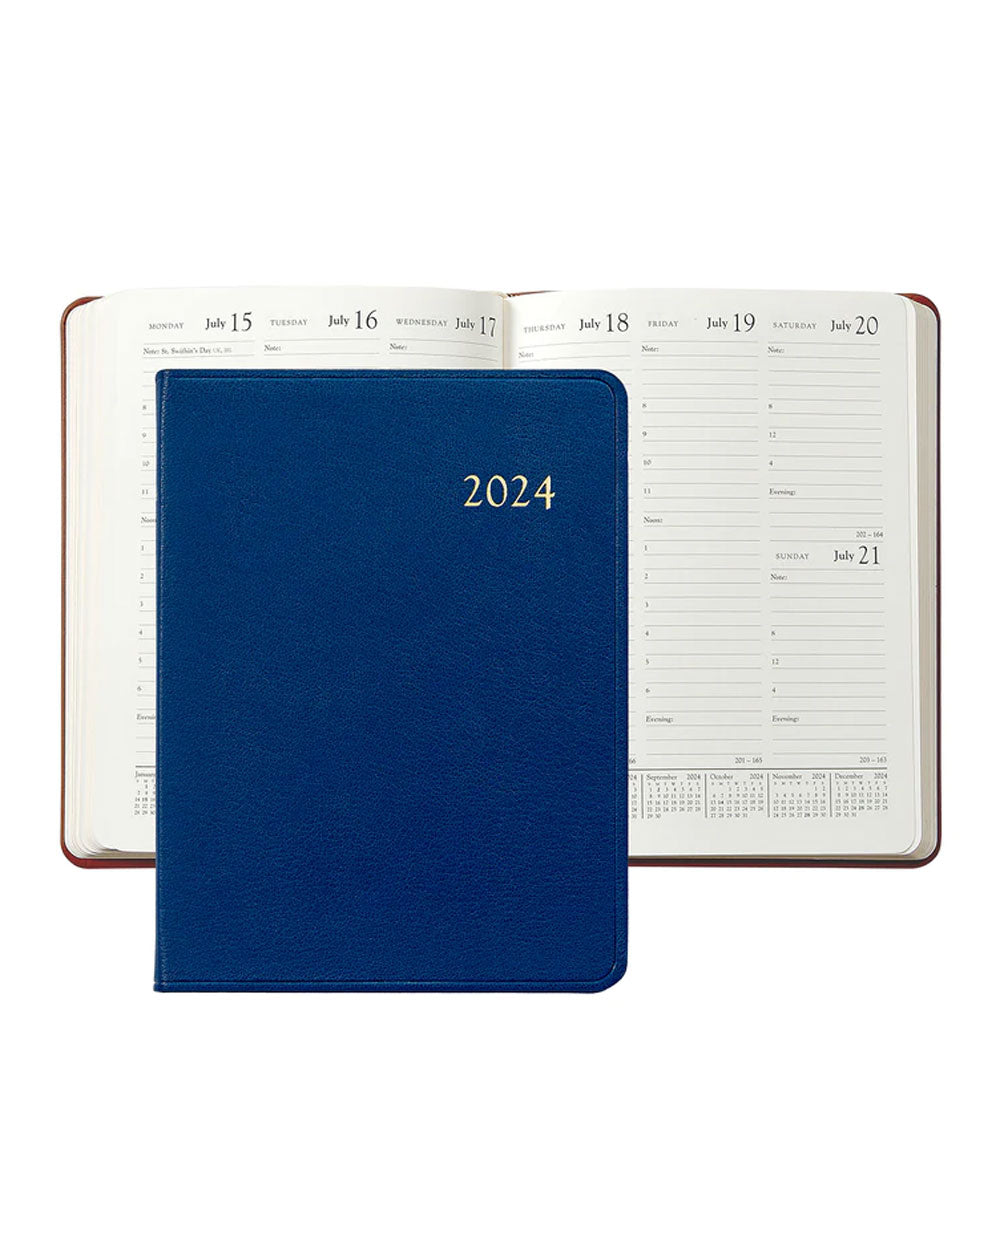 2024 Desk Diary in Royal Blue